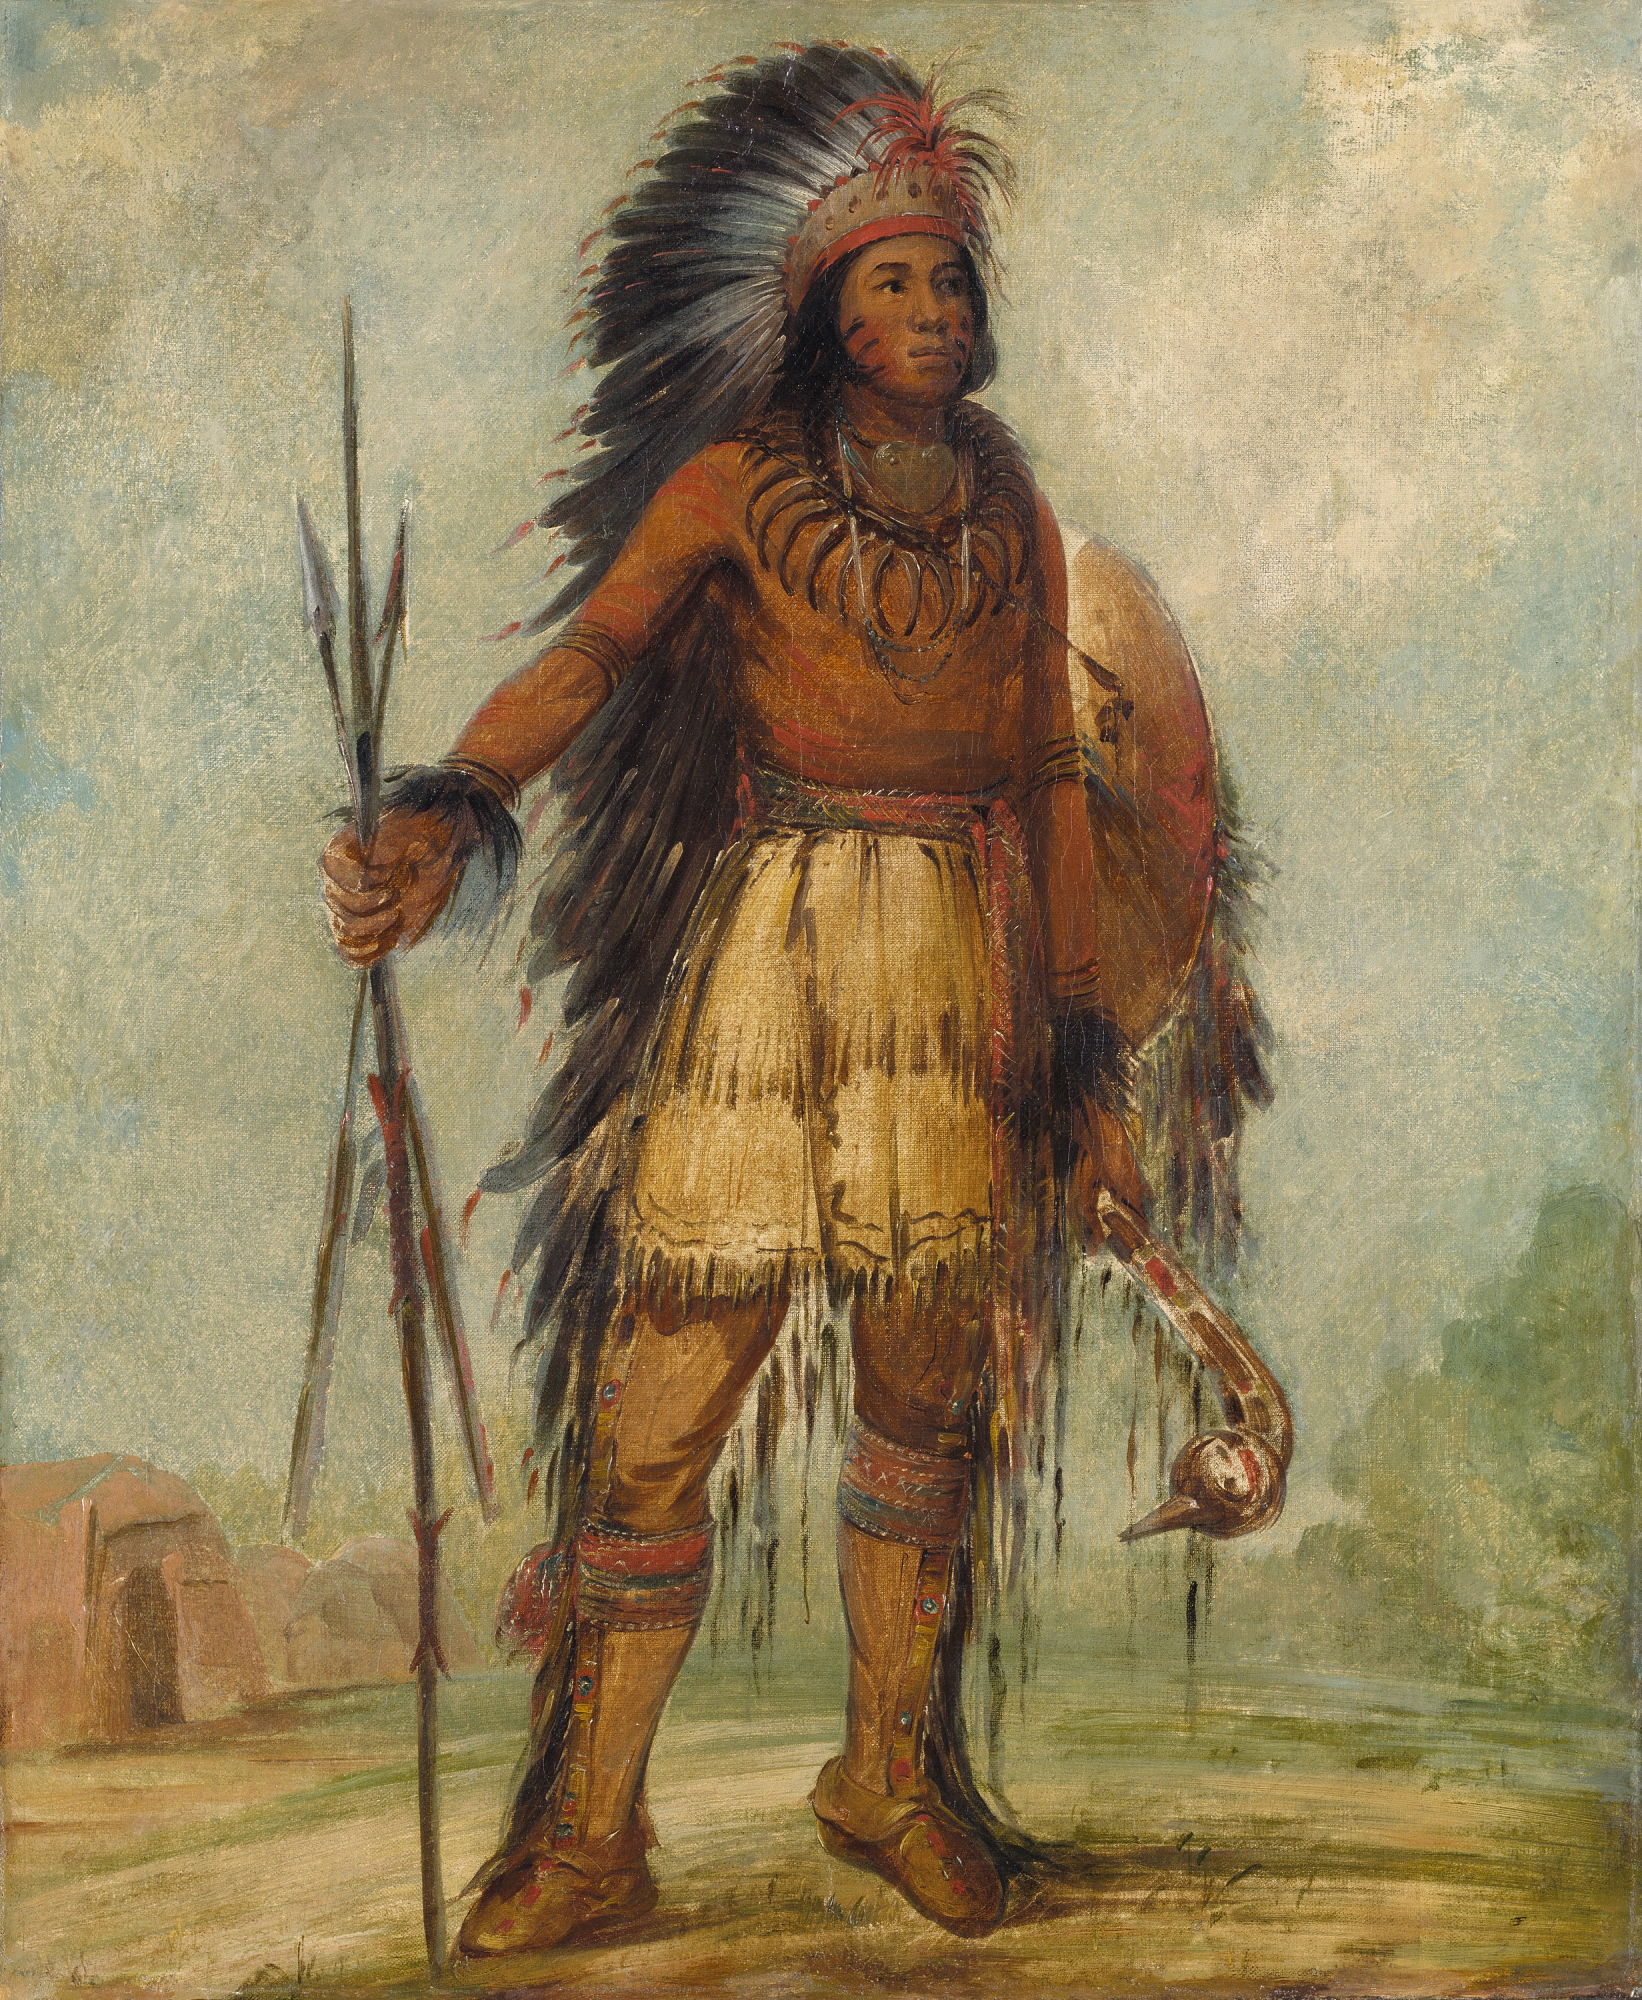 Вождь племени кукарача. Джордж Кэтлин индейцы. Индейцы Северной Америки оджибве. Индейцы 16 век. Древние индейцы Северной Америки.